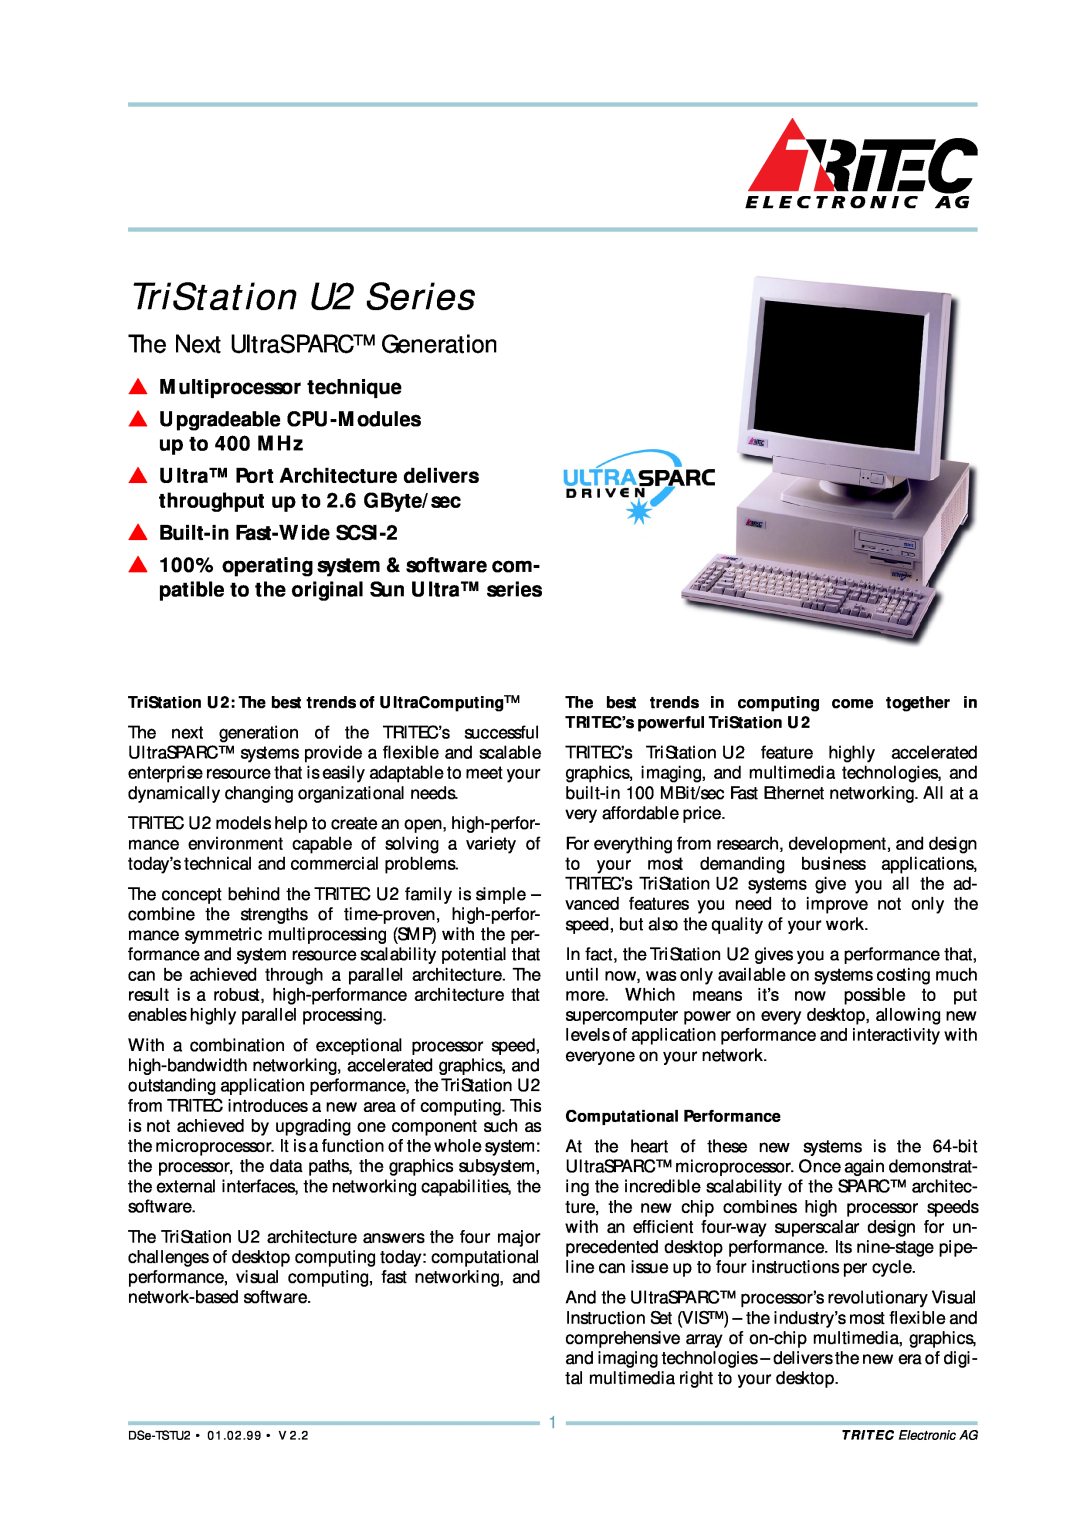 Tritec Industrial AGDSE-TSTU2 manual TriStation U2 The best trends of UltraComputing, Computational Performance 